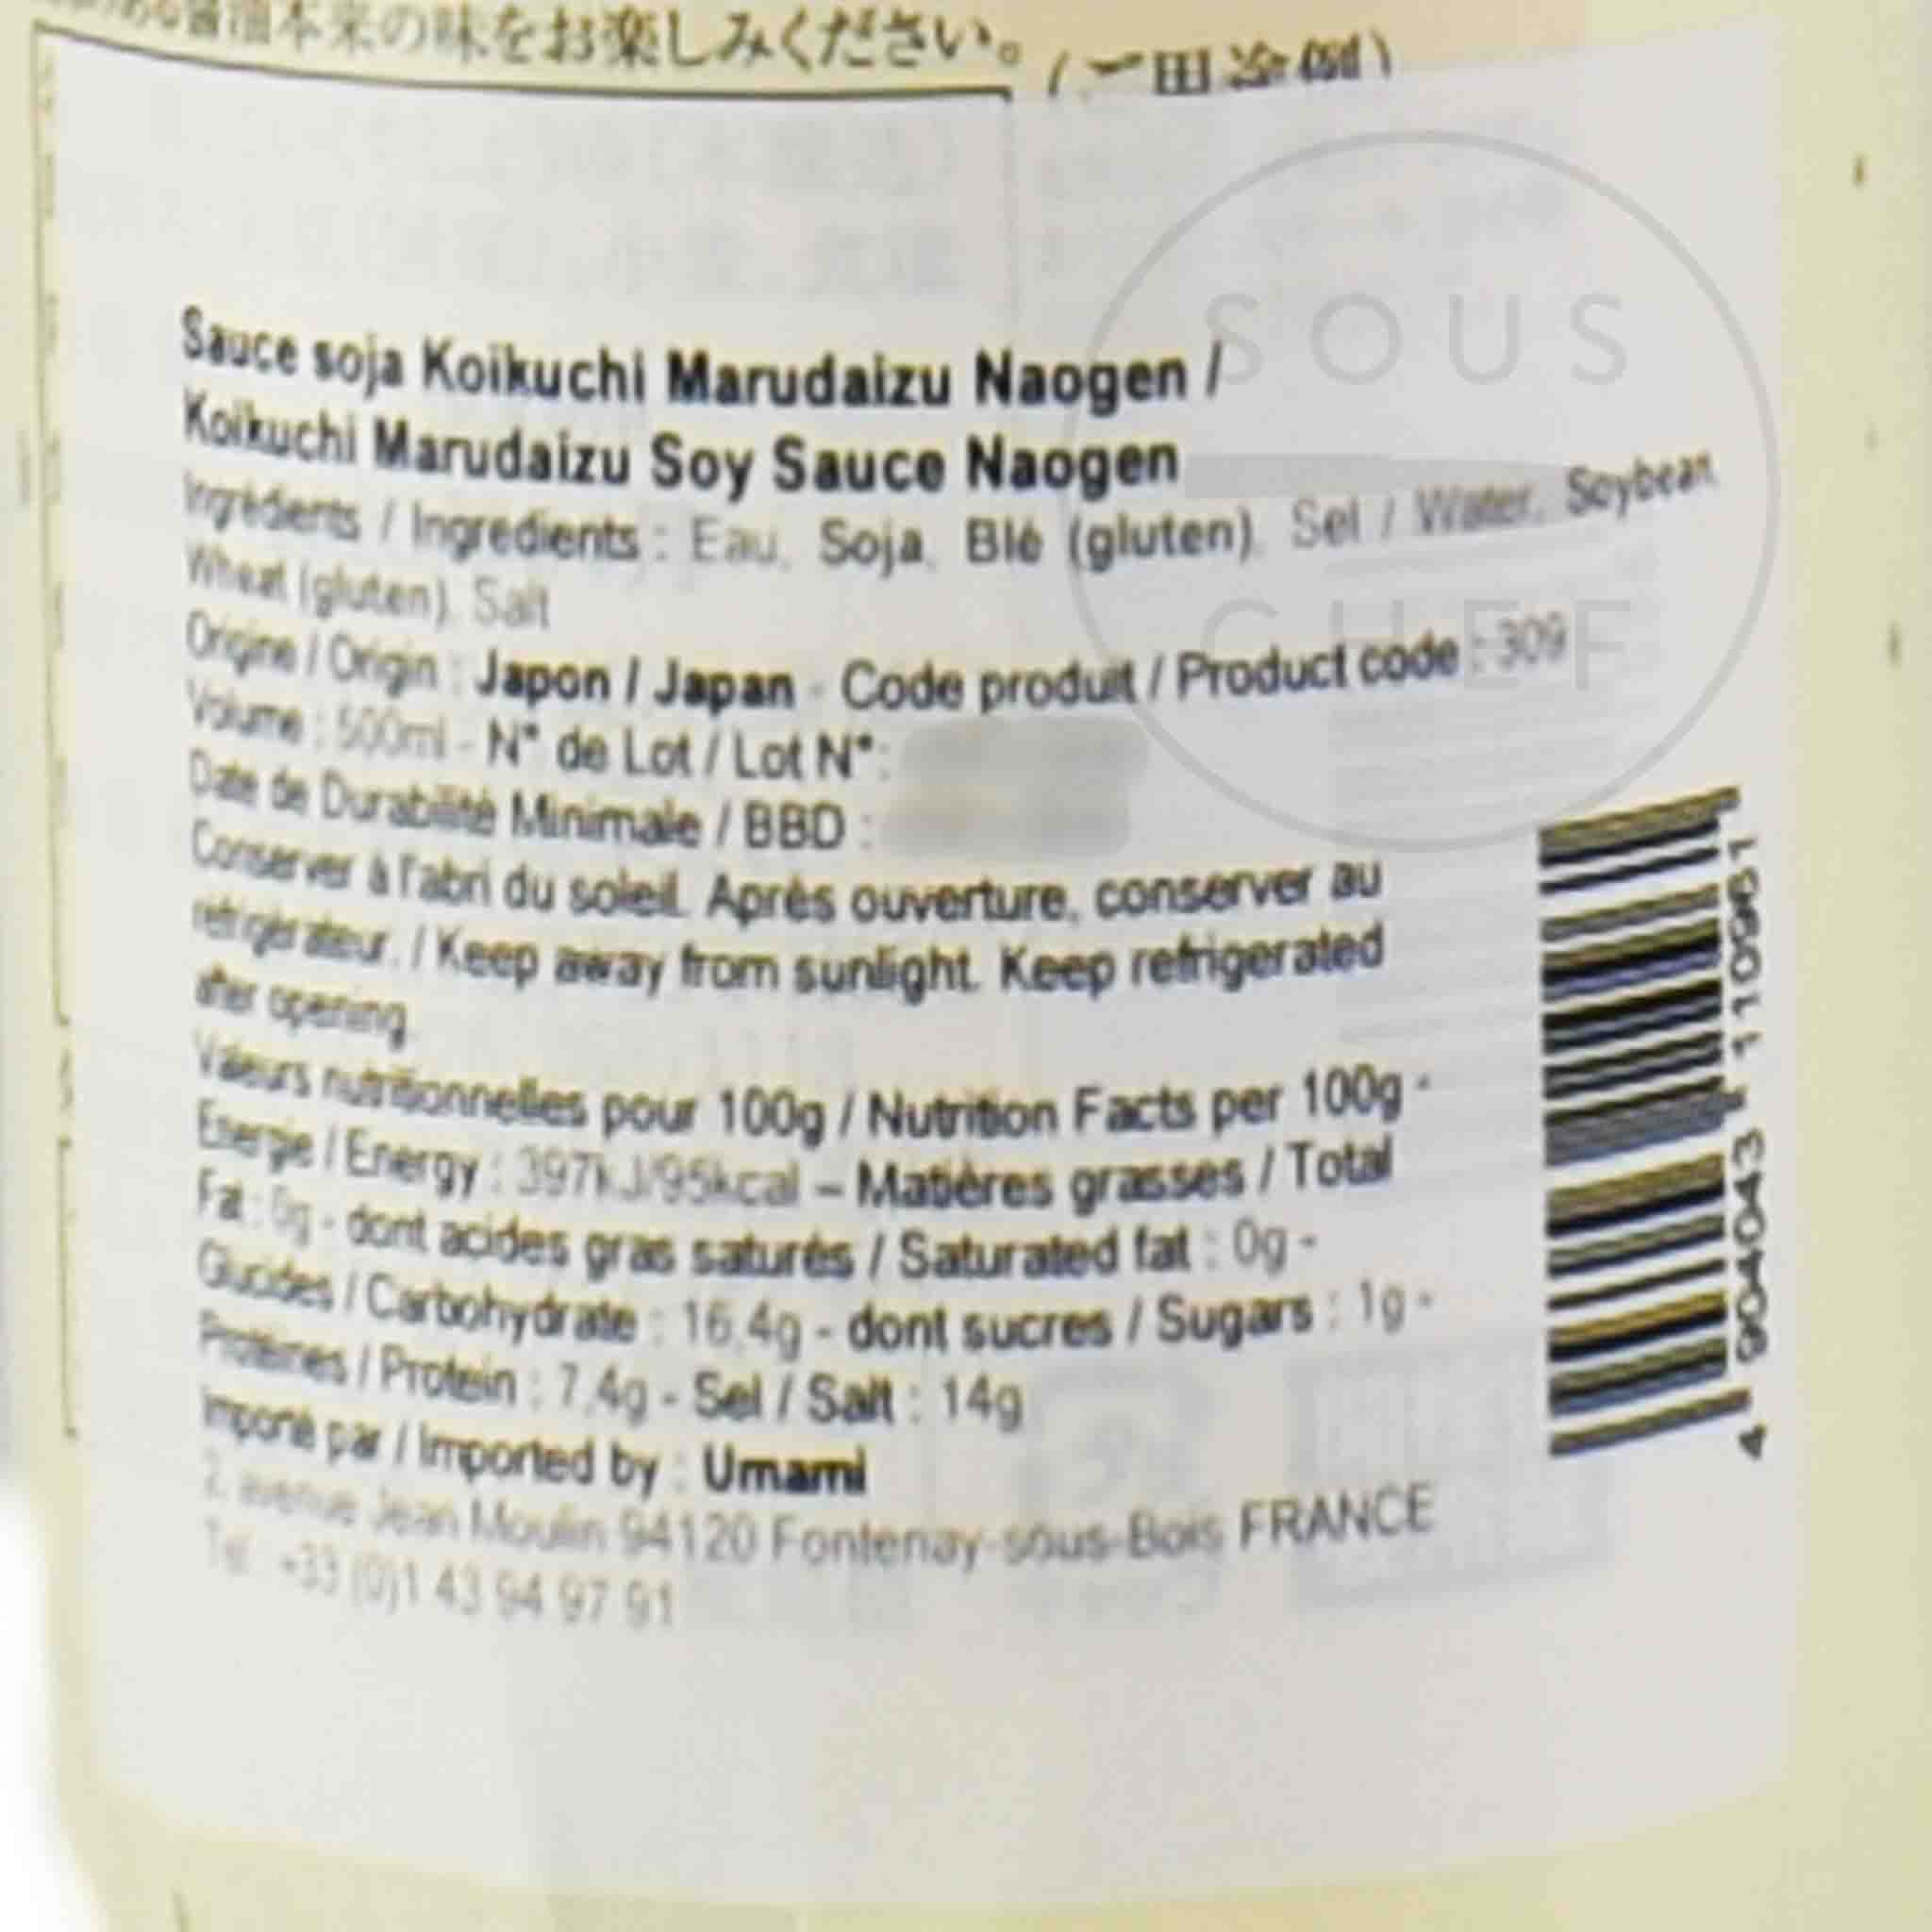 Koikuchi Marudaizu Soy Sauce Naogen, 500ml